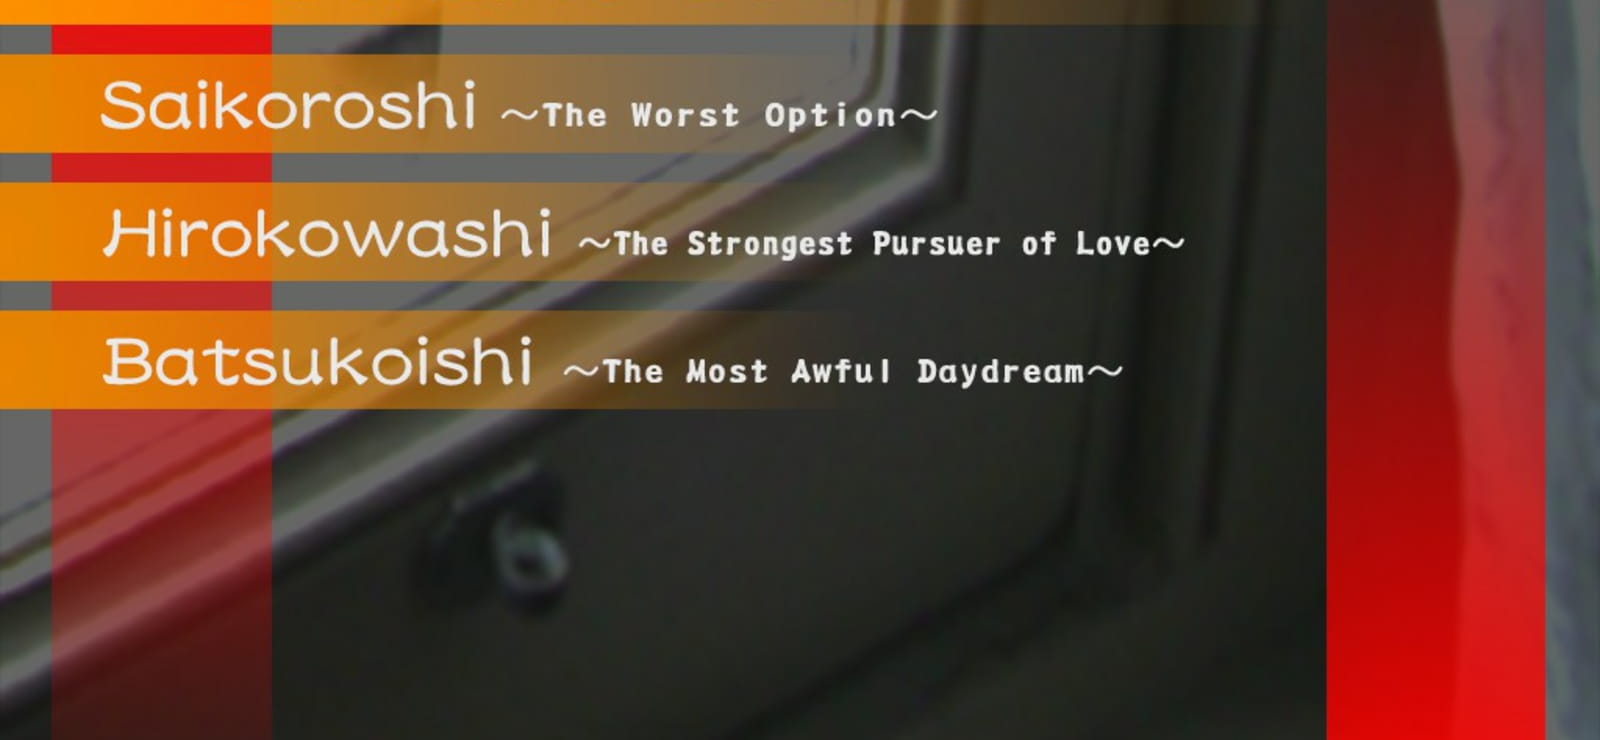 Higurashi When They Cry Hou - Rei